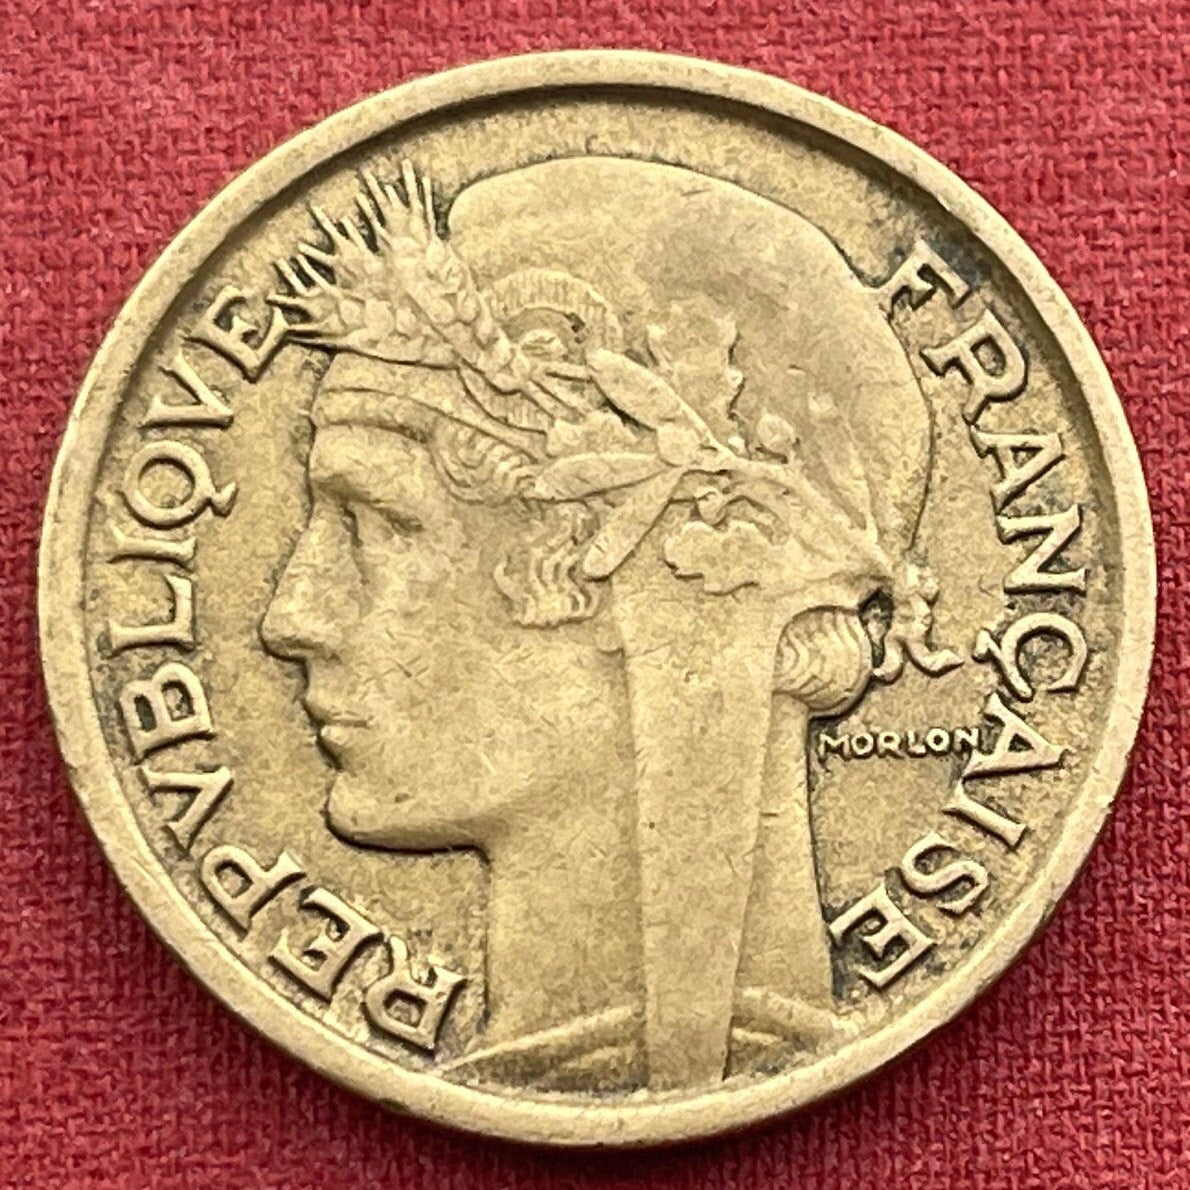 Marianne 2 Francs & Liberté, Égalité, Fraternité France Authentic Coin Money for Jewelry (Liberty Equality Brotherhood) (Third Republic)